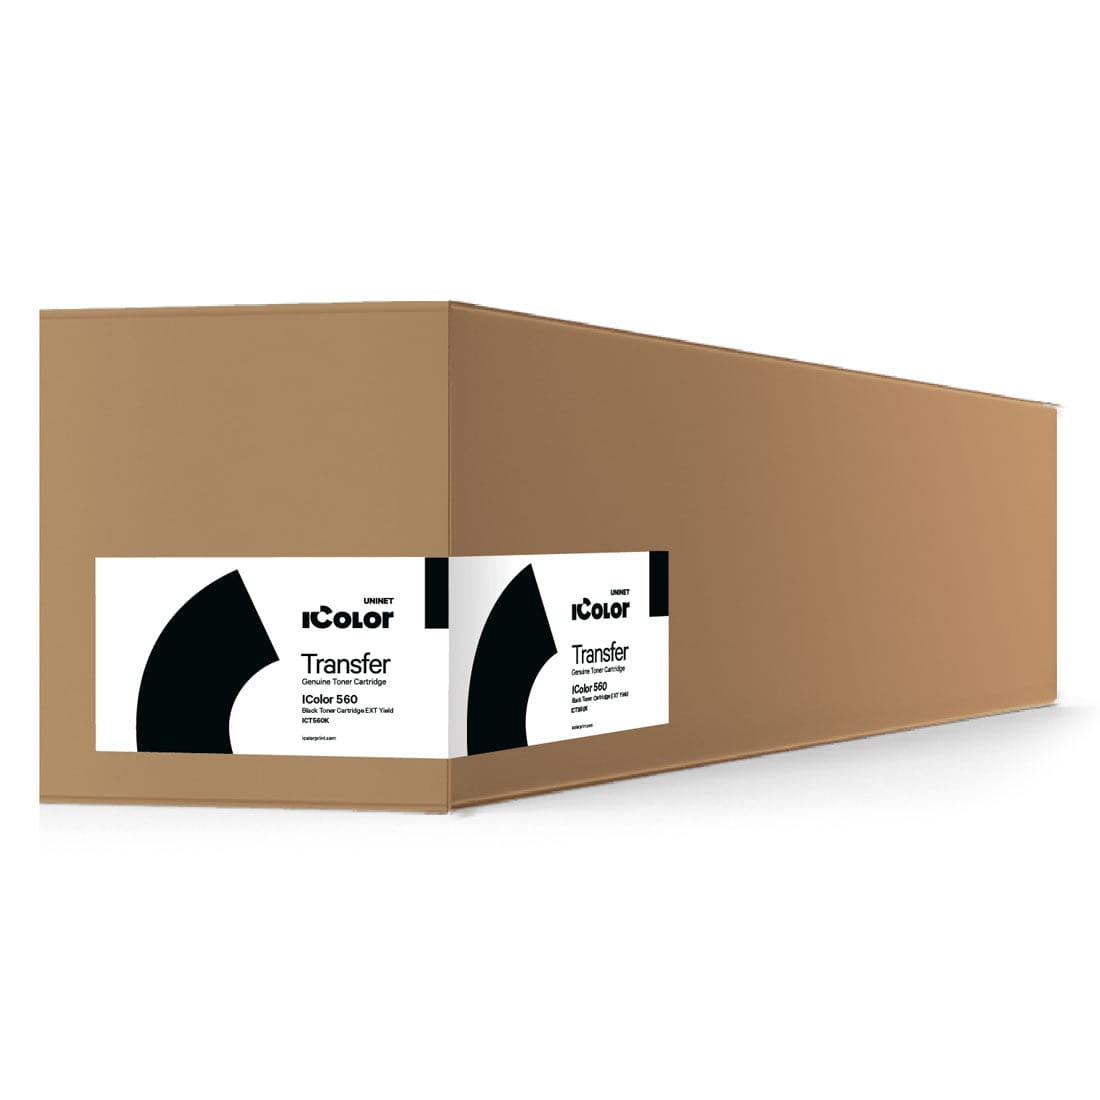 Uninet iColor 560 Toners - Joto Imaging Supplies US